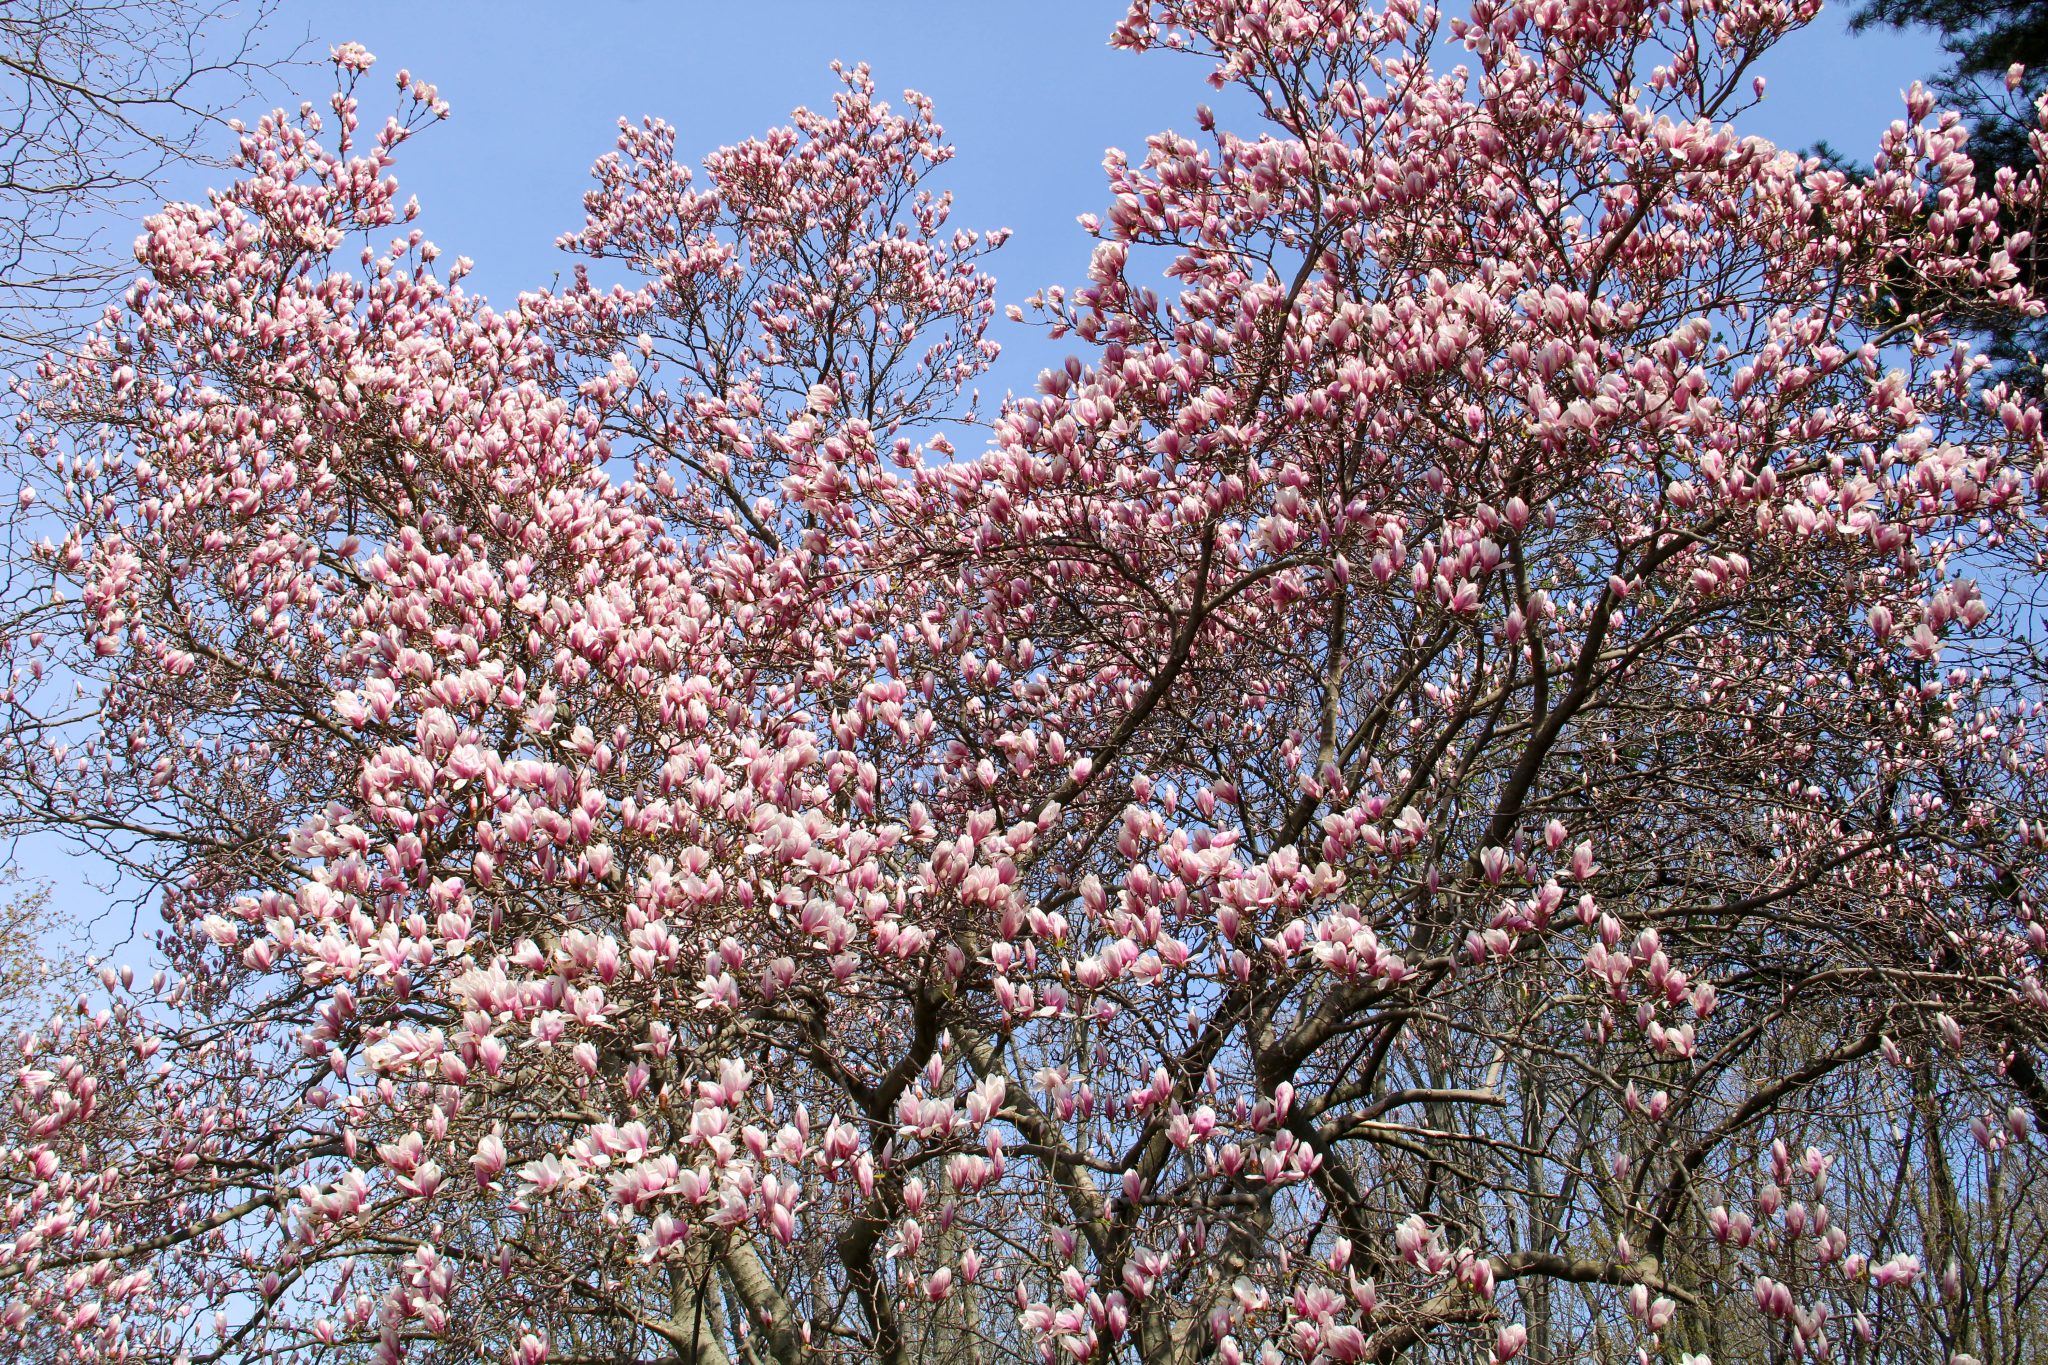 Magnolia Tree, Central New York State USA